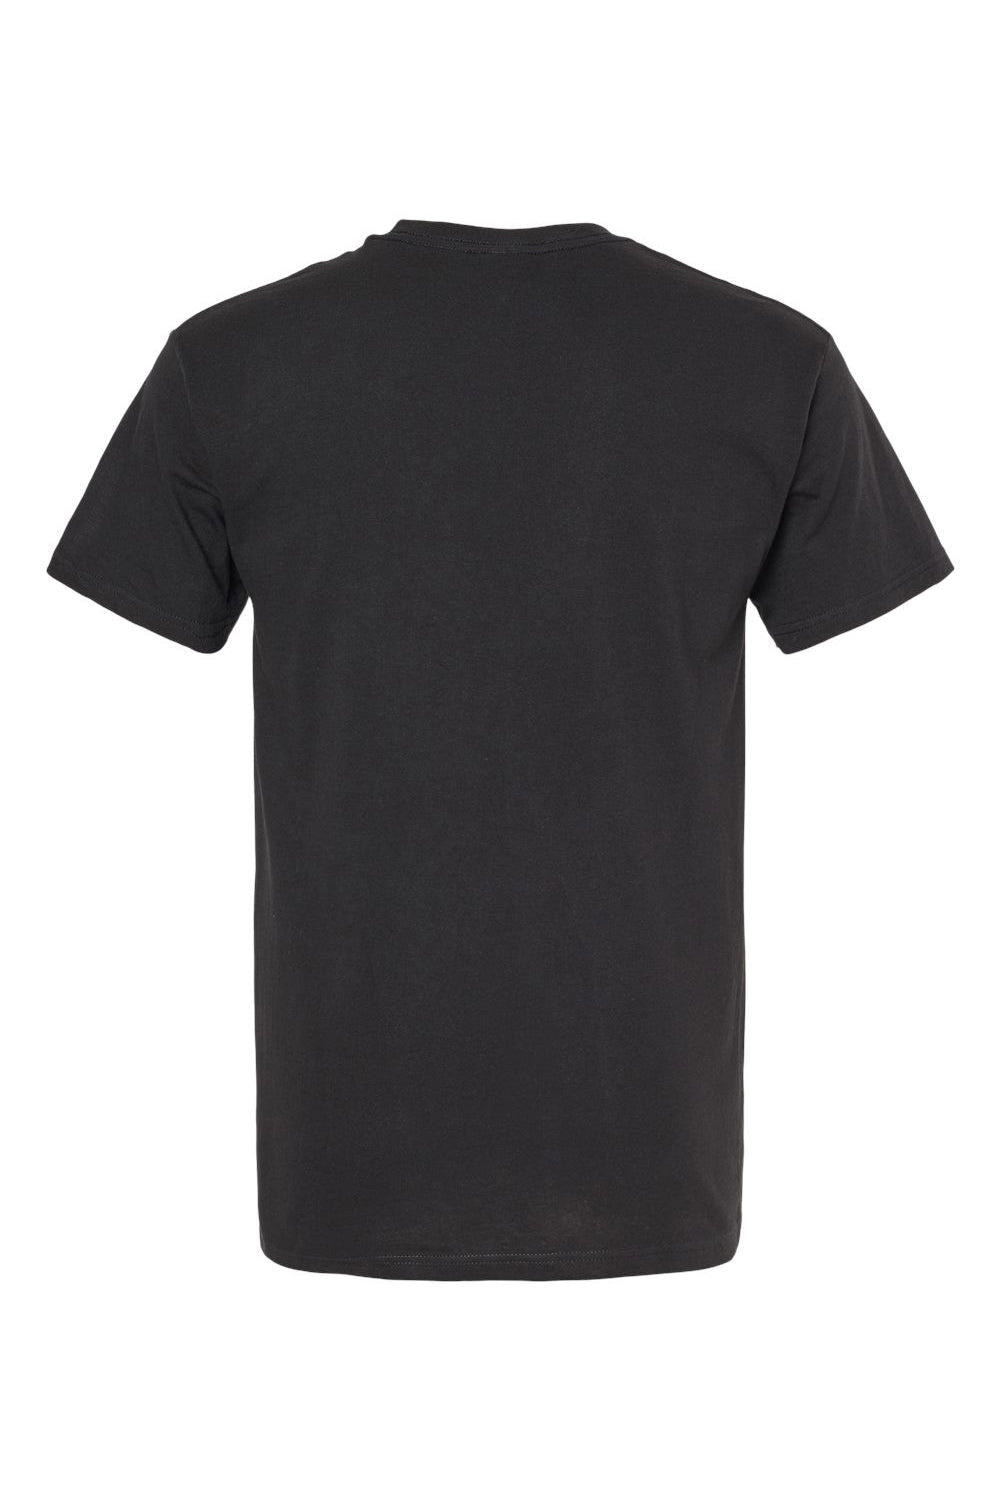 M&O 4800 Mens Gold Soft Touch Short Sleeve Crewneck T-Shirt Black Flat Back